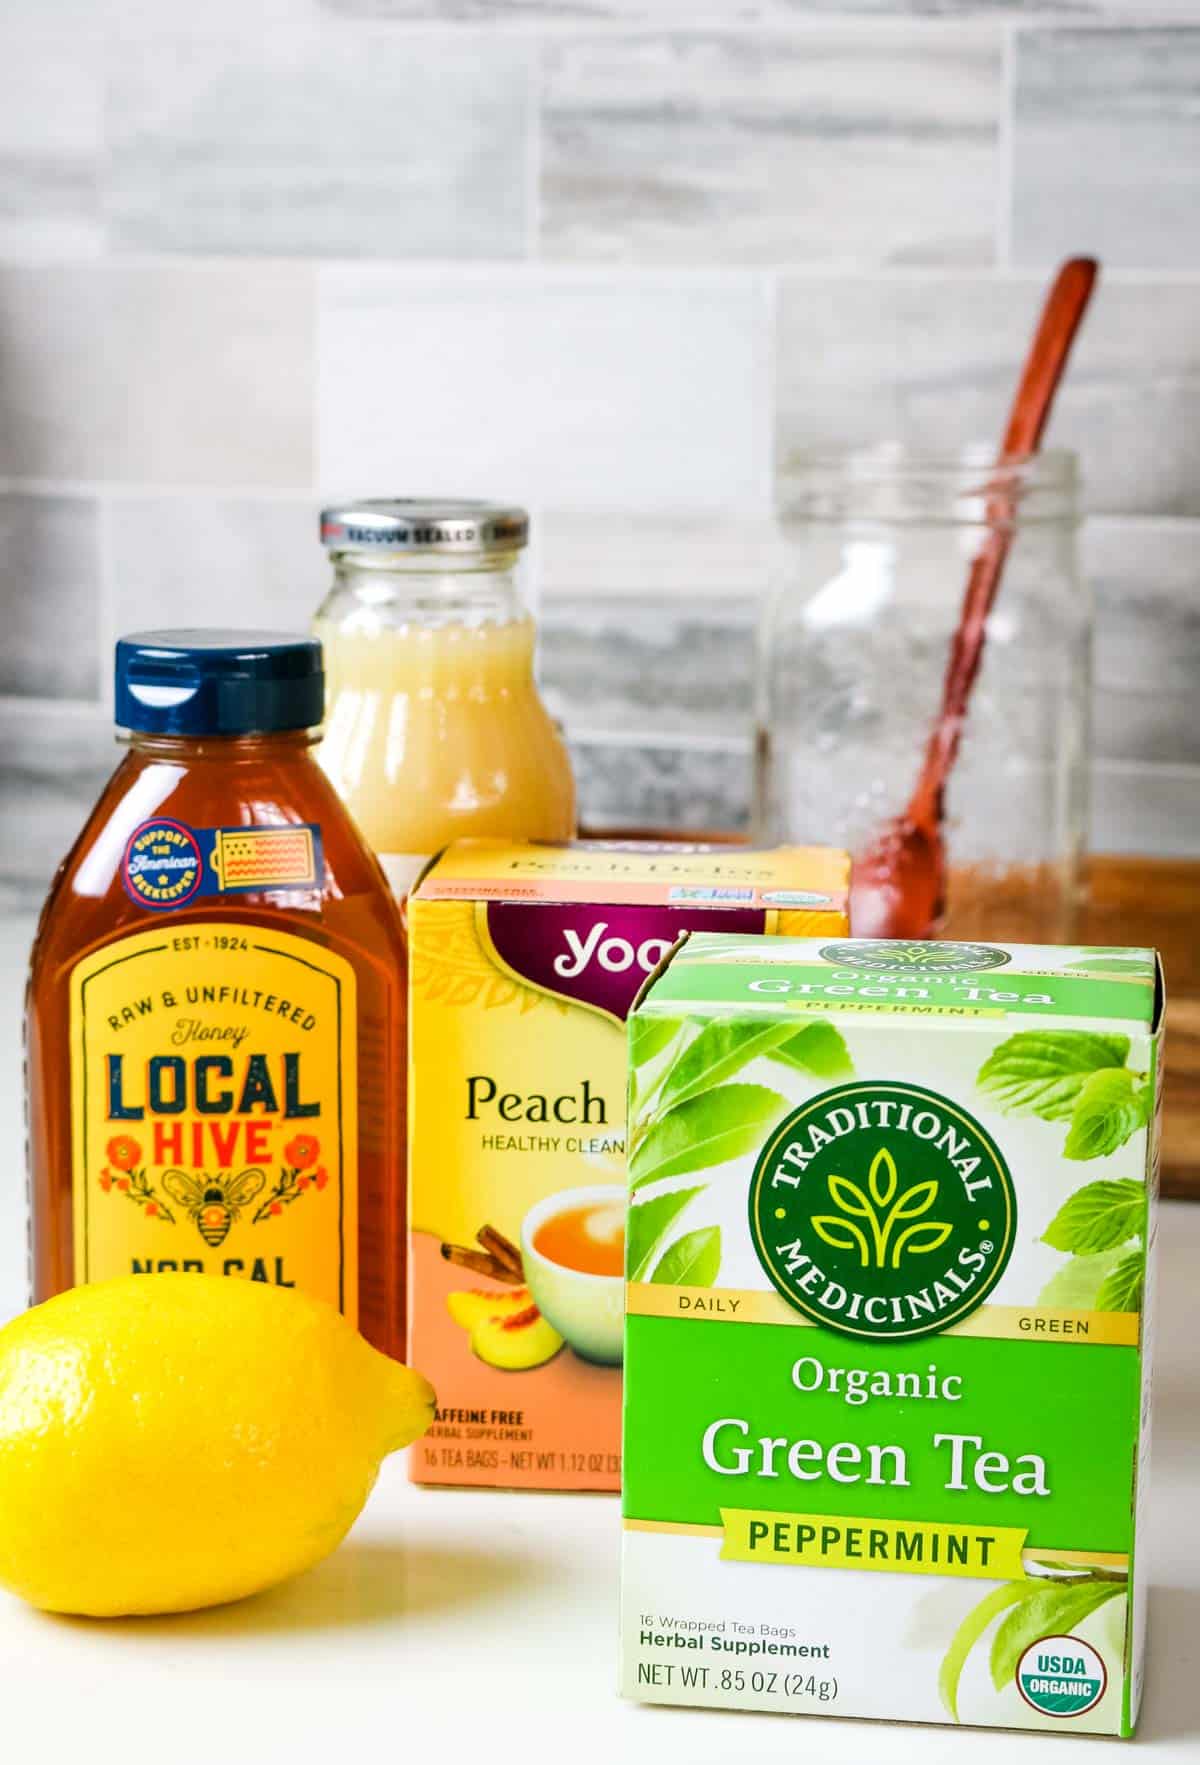 Ingredients for Honey Citrus Mint Tea: organic green tea, peppermint tea, peach detox tea, lemon, and honey